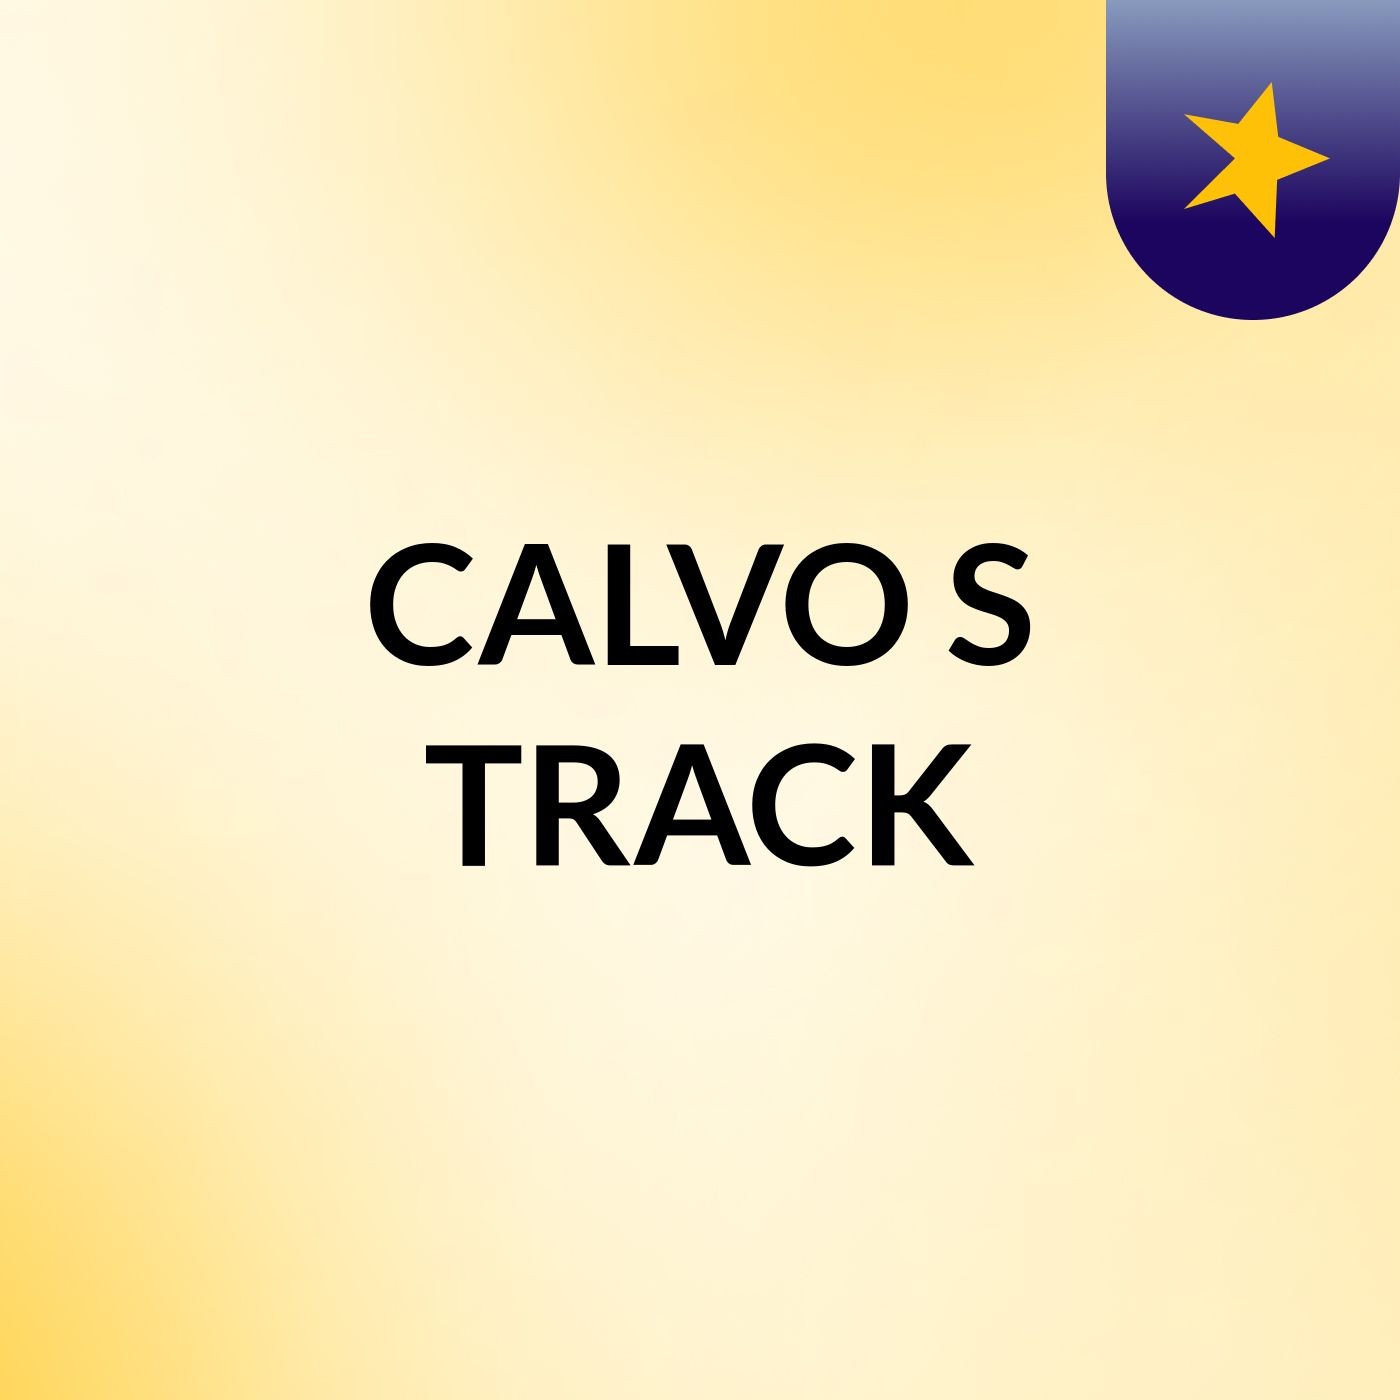 CALVO'S TRACK